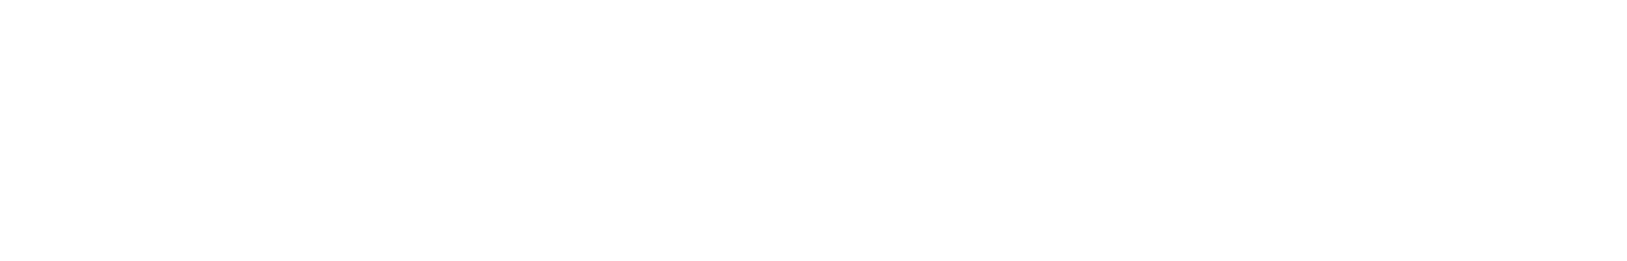 CommBox-white-logo